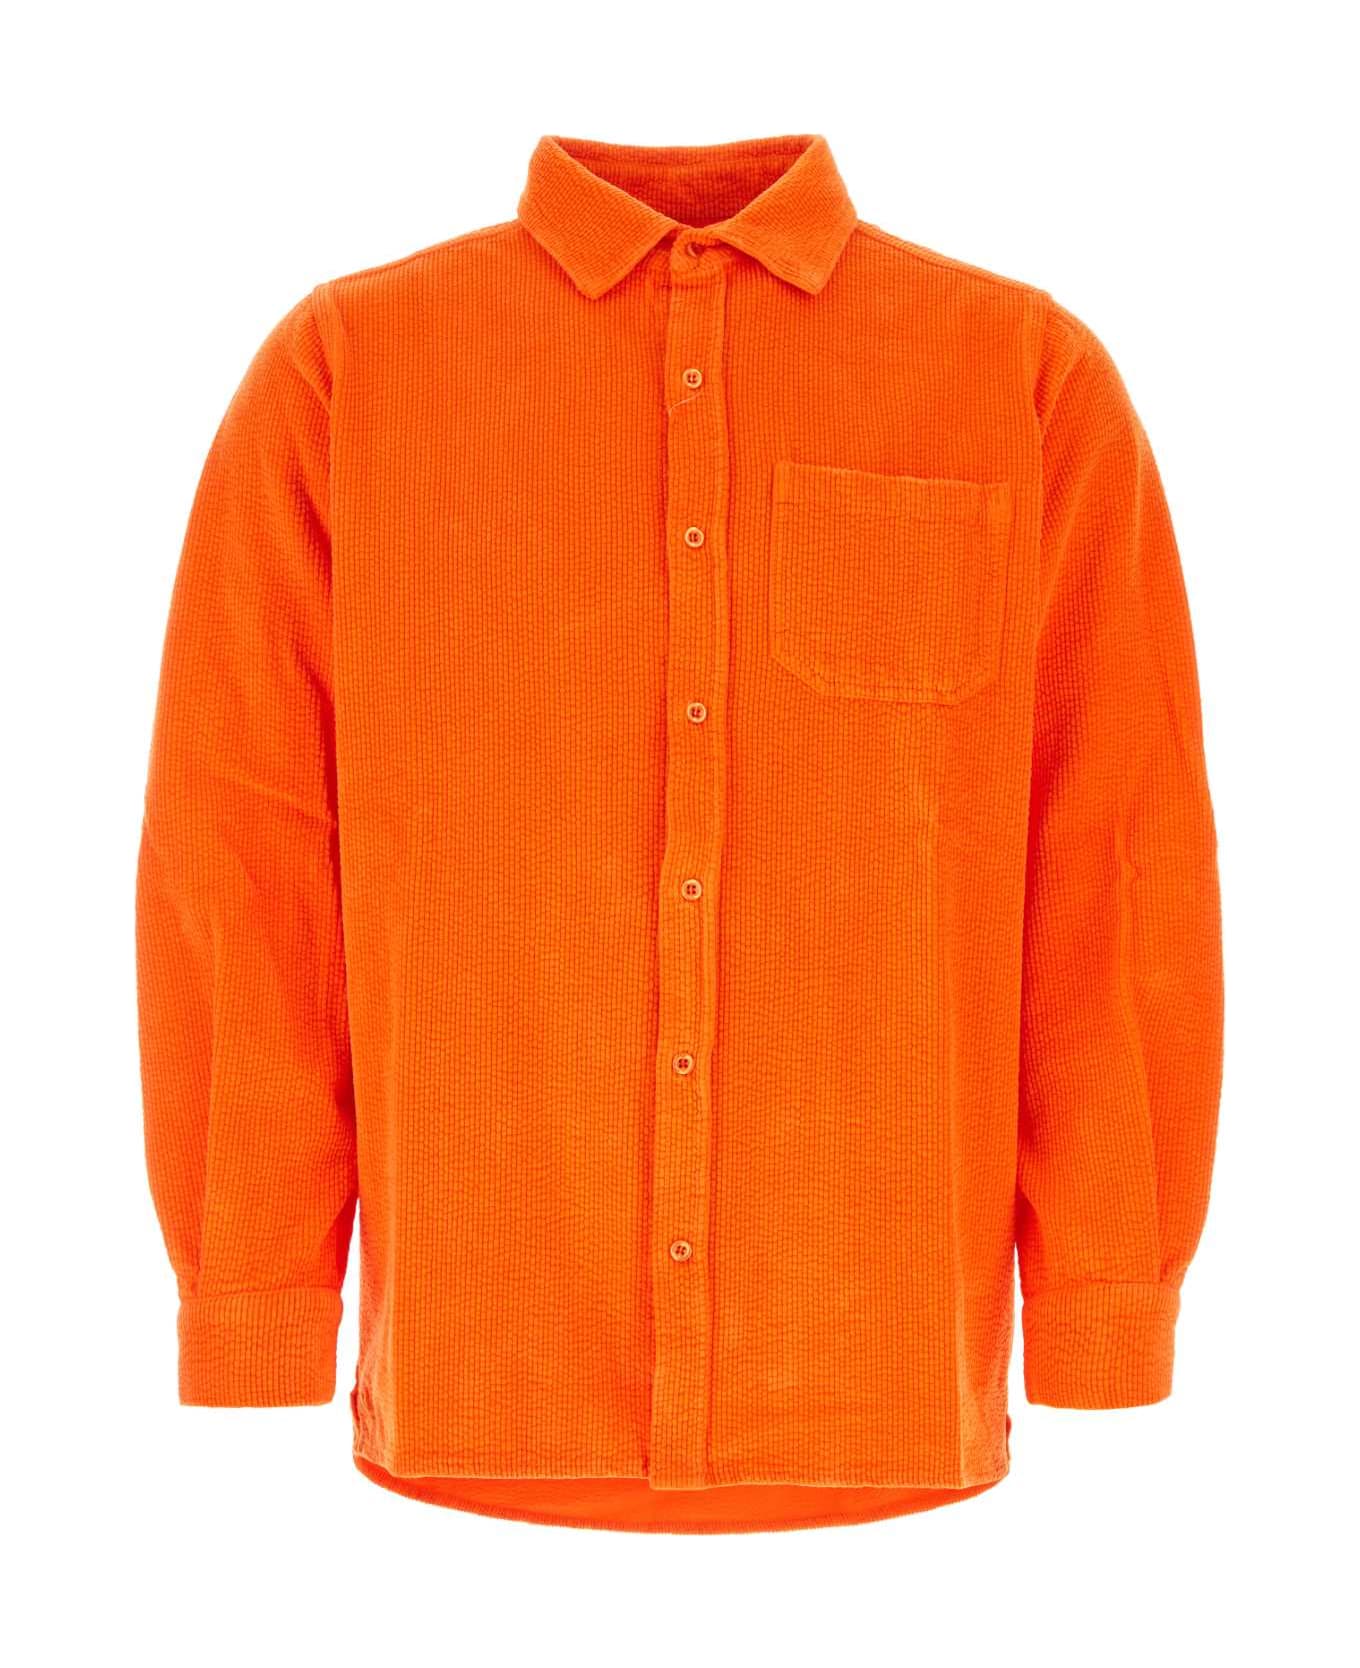 ERL Orange Corduroy Shirt - ORANGE